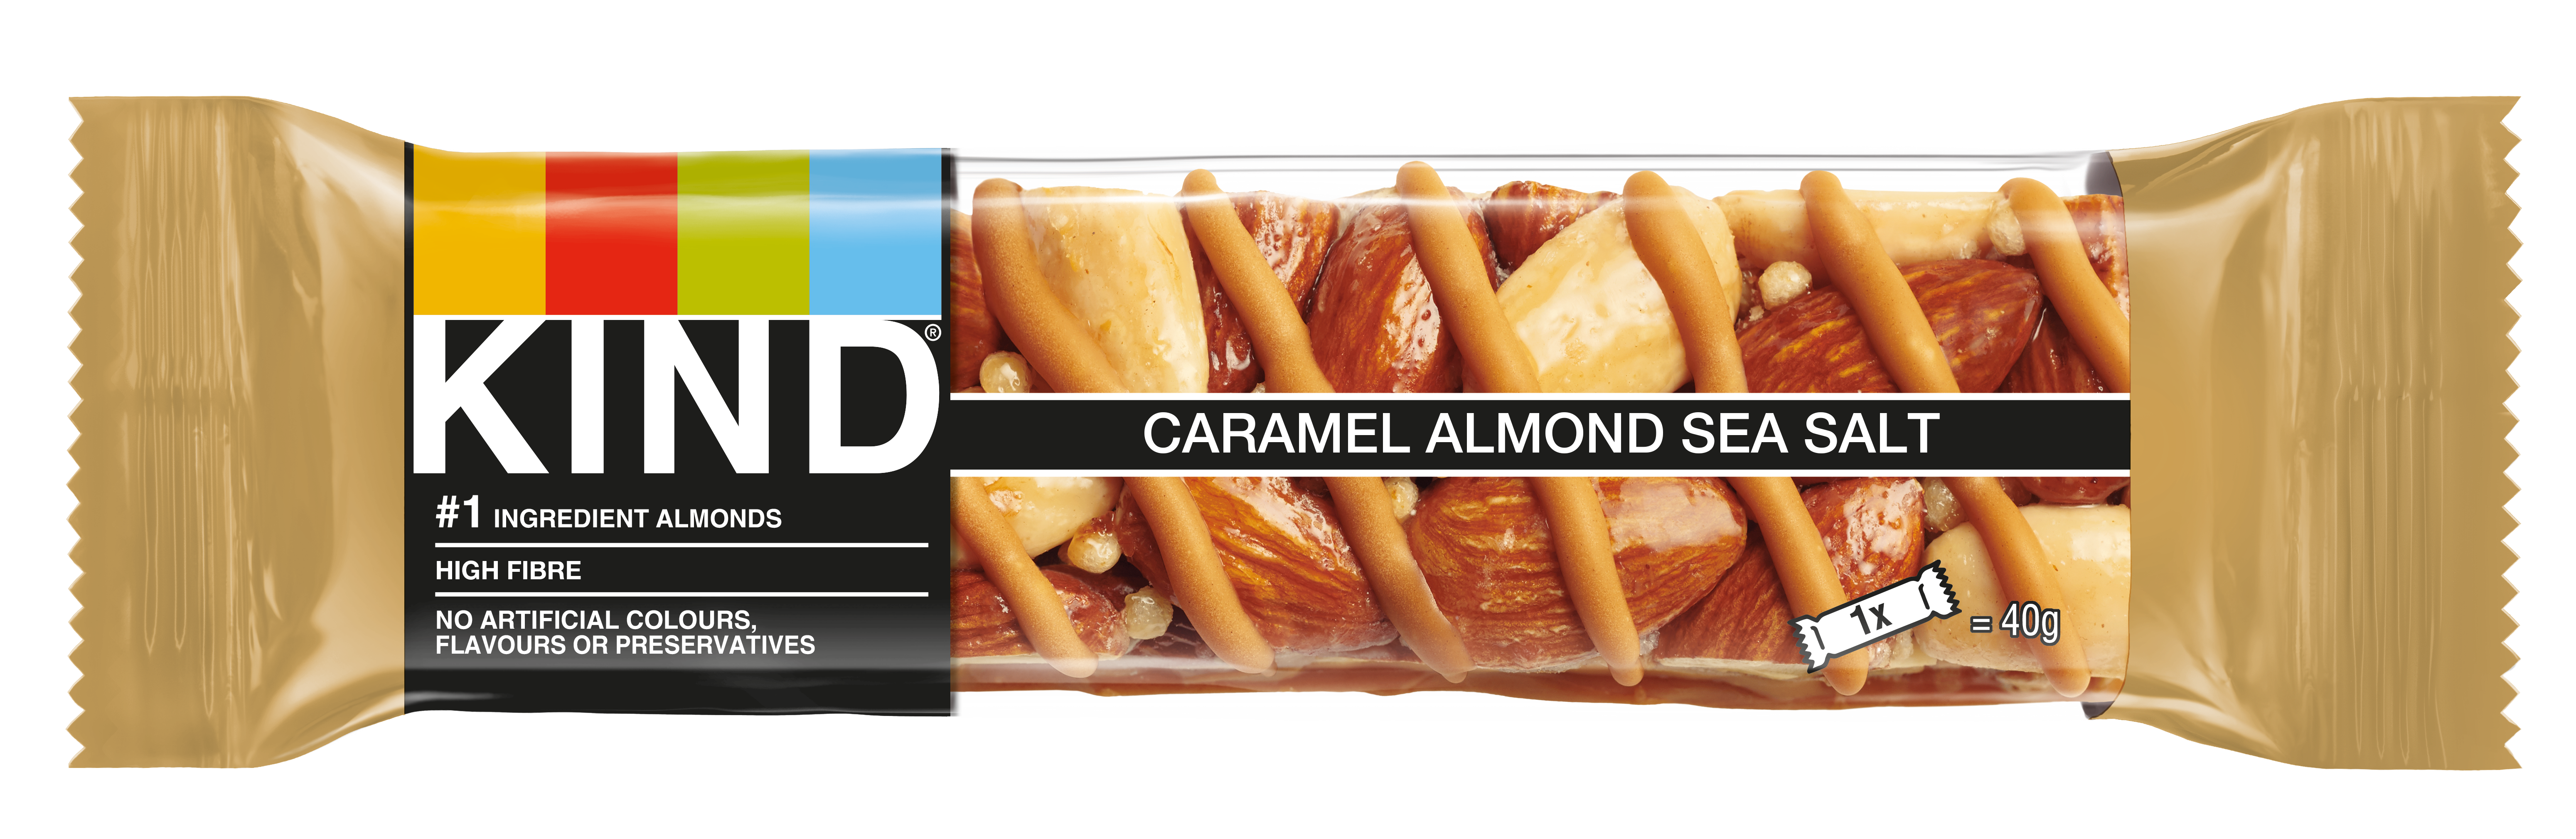 Caramel-Almond-Sea-Salt